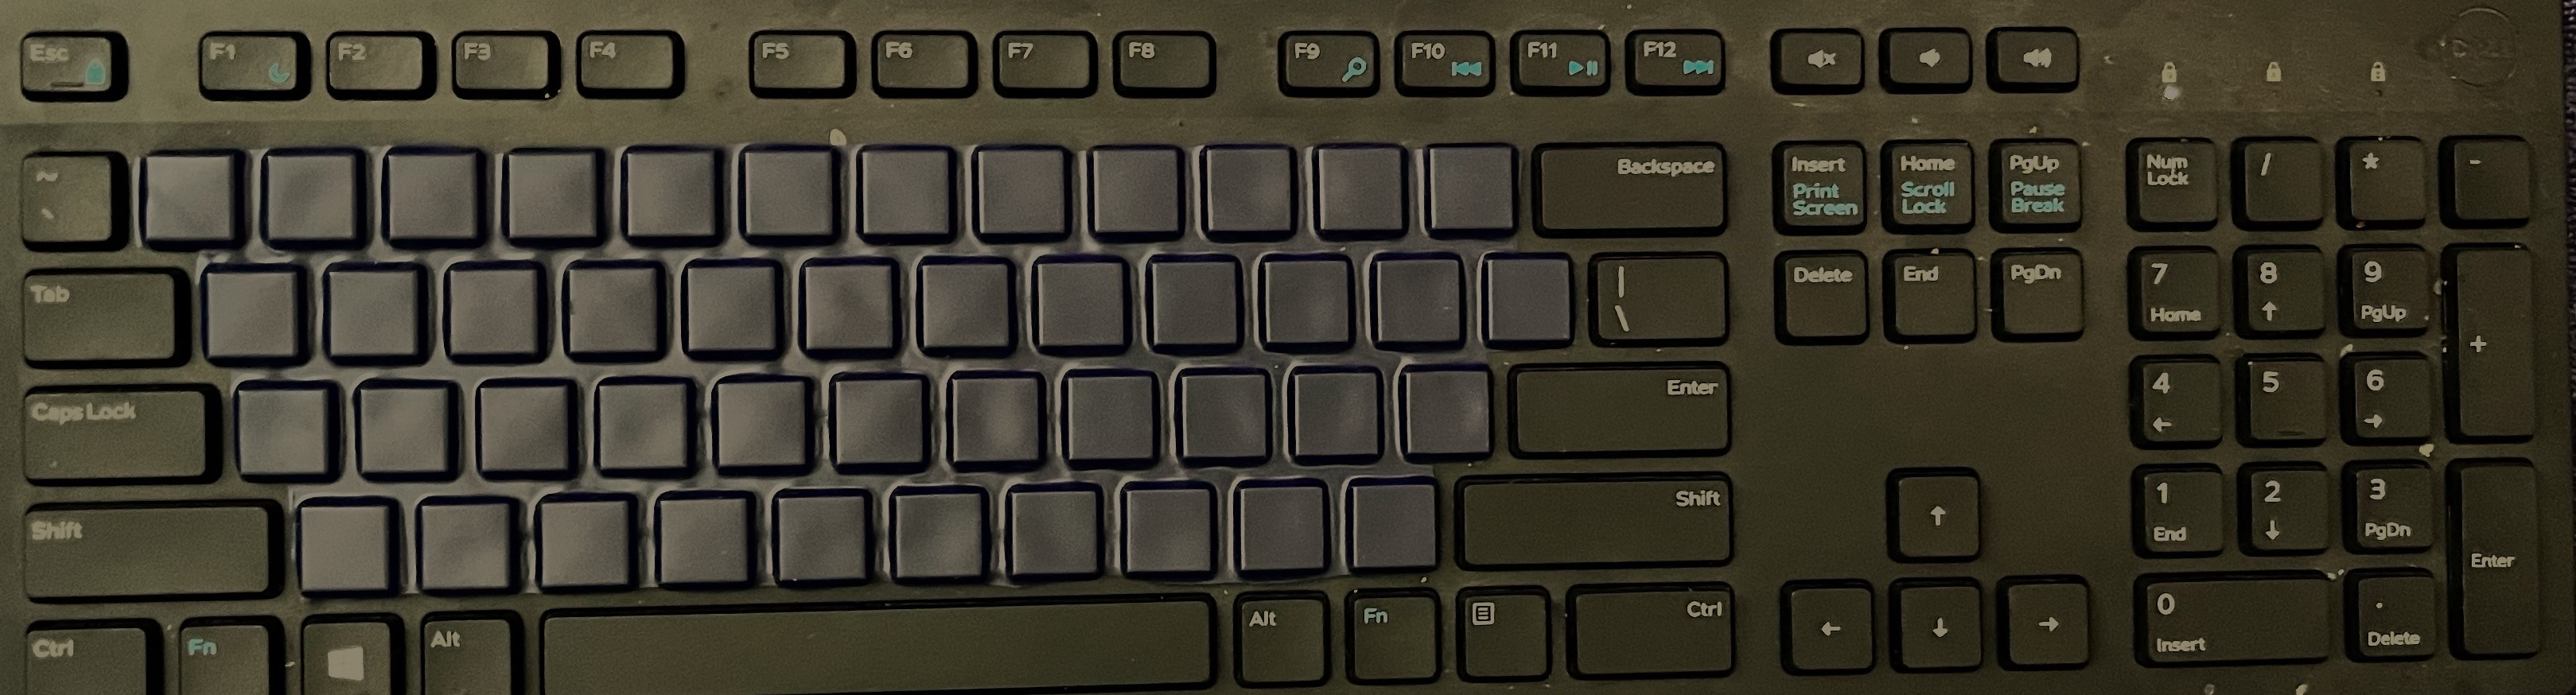 EducationMax Stop-the-Peek Keyboard Cover